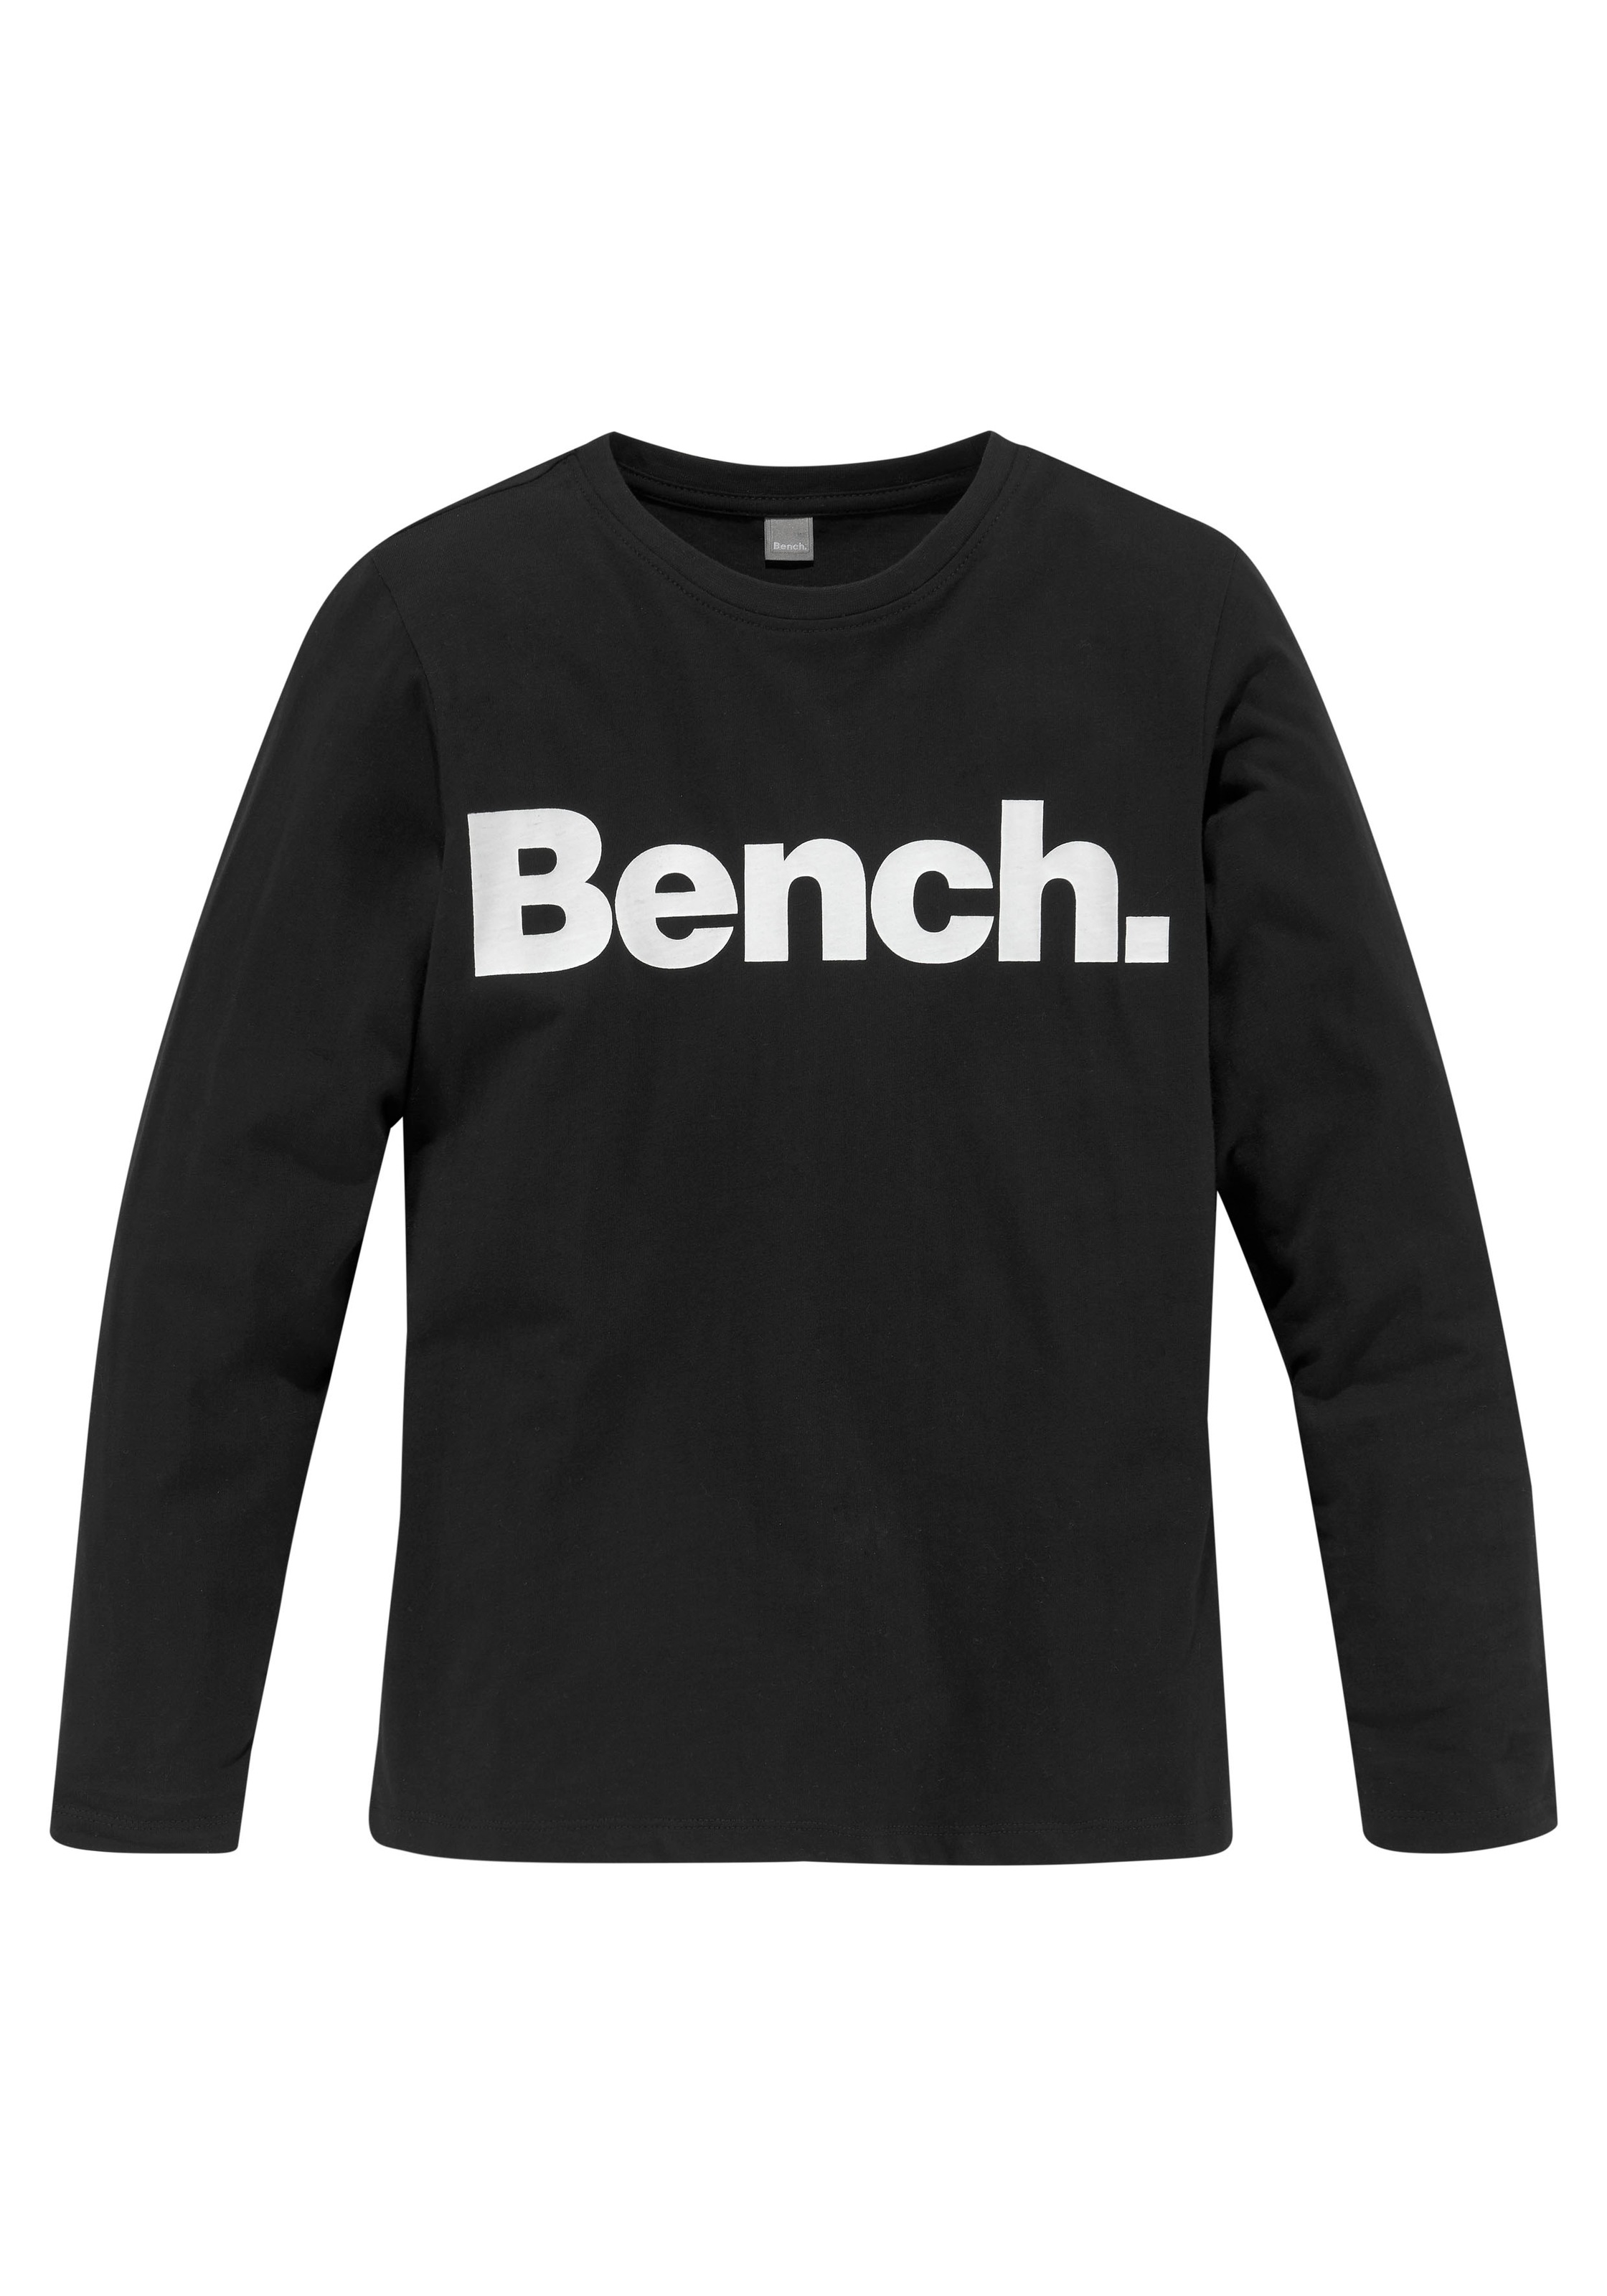 online kaufen »Basic«, mit Langarmshirt Bench. Logodruck